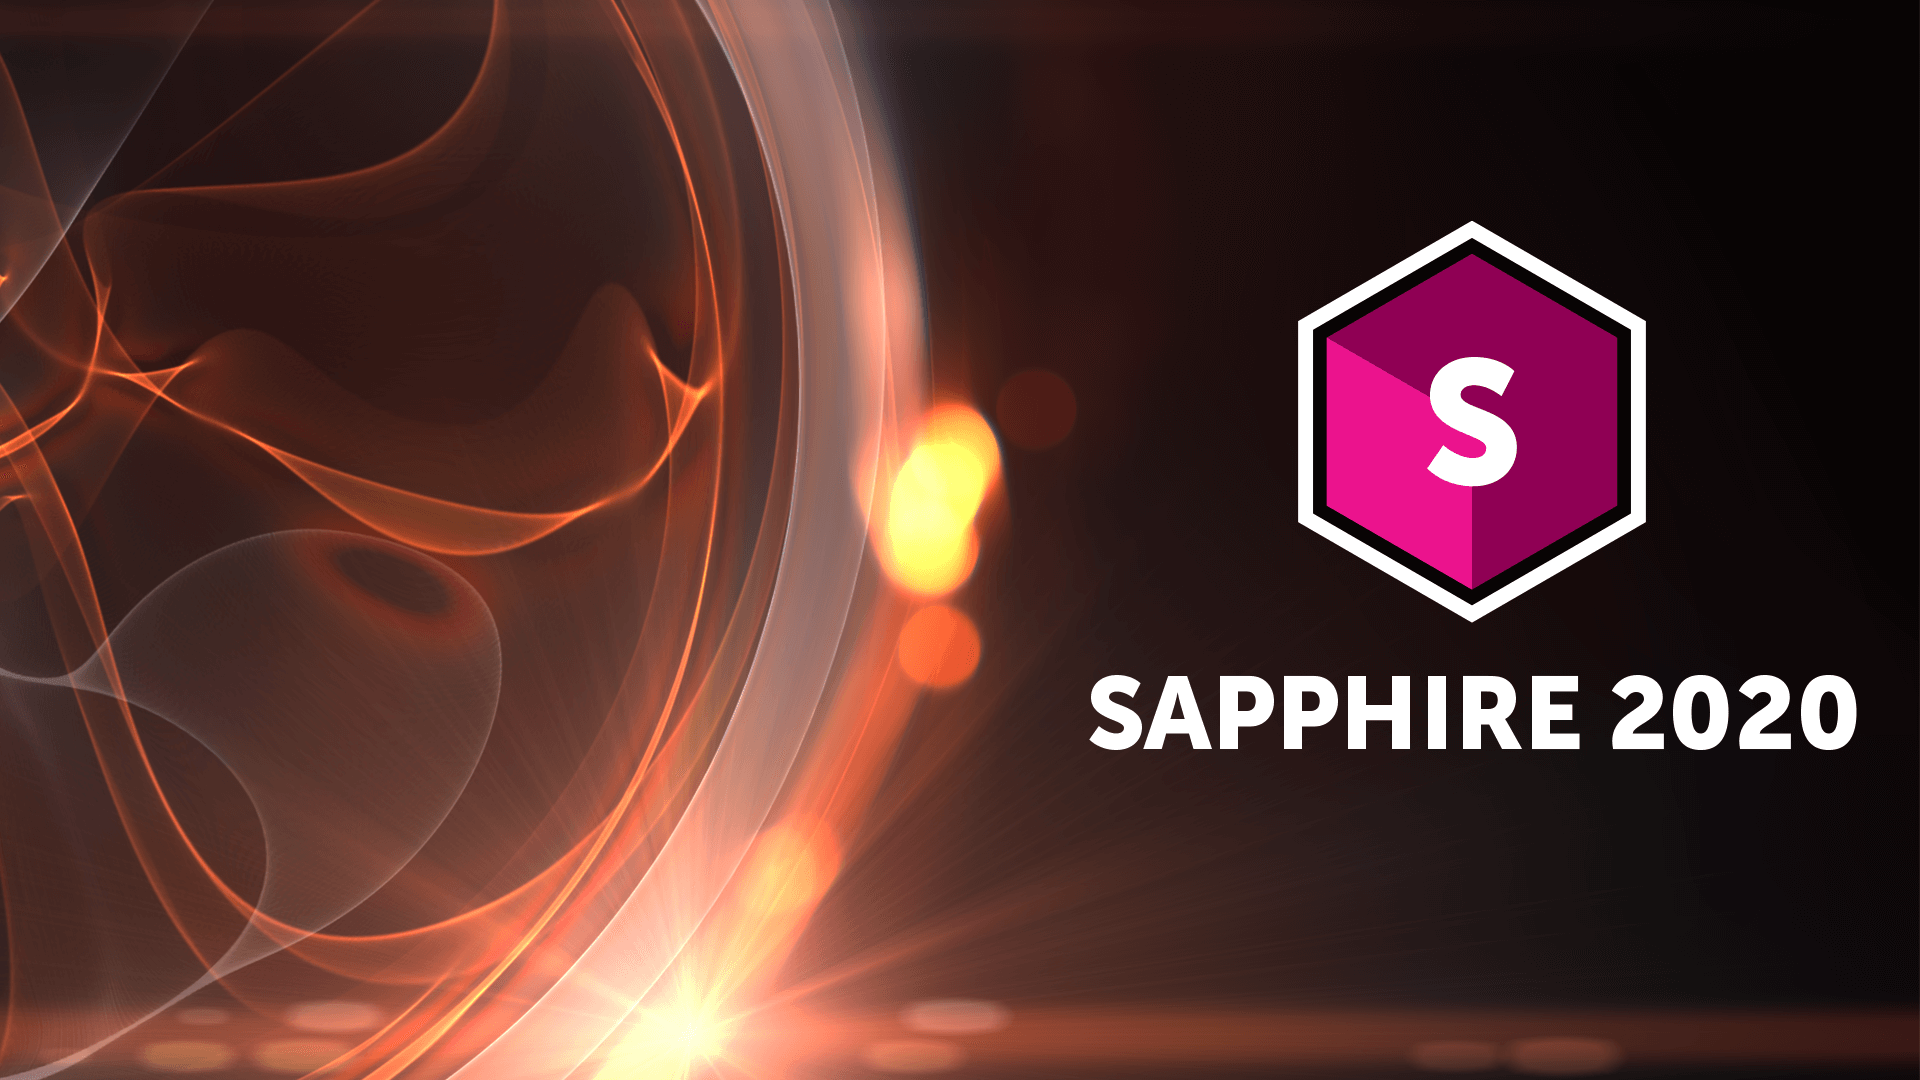 Sapphire 2020 banner image